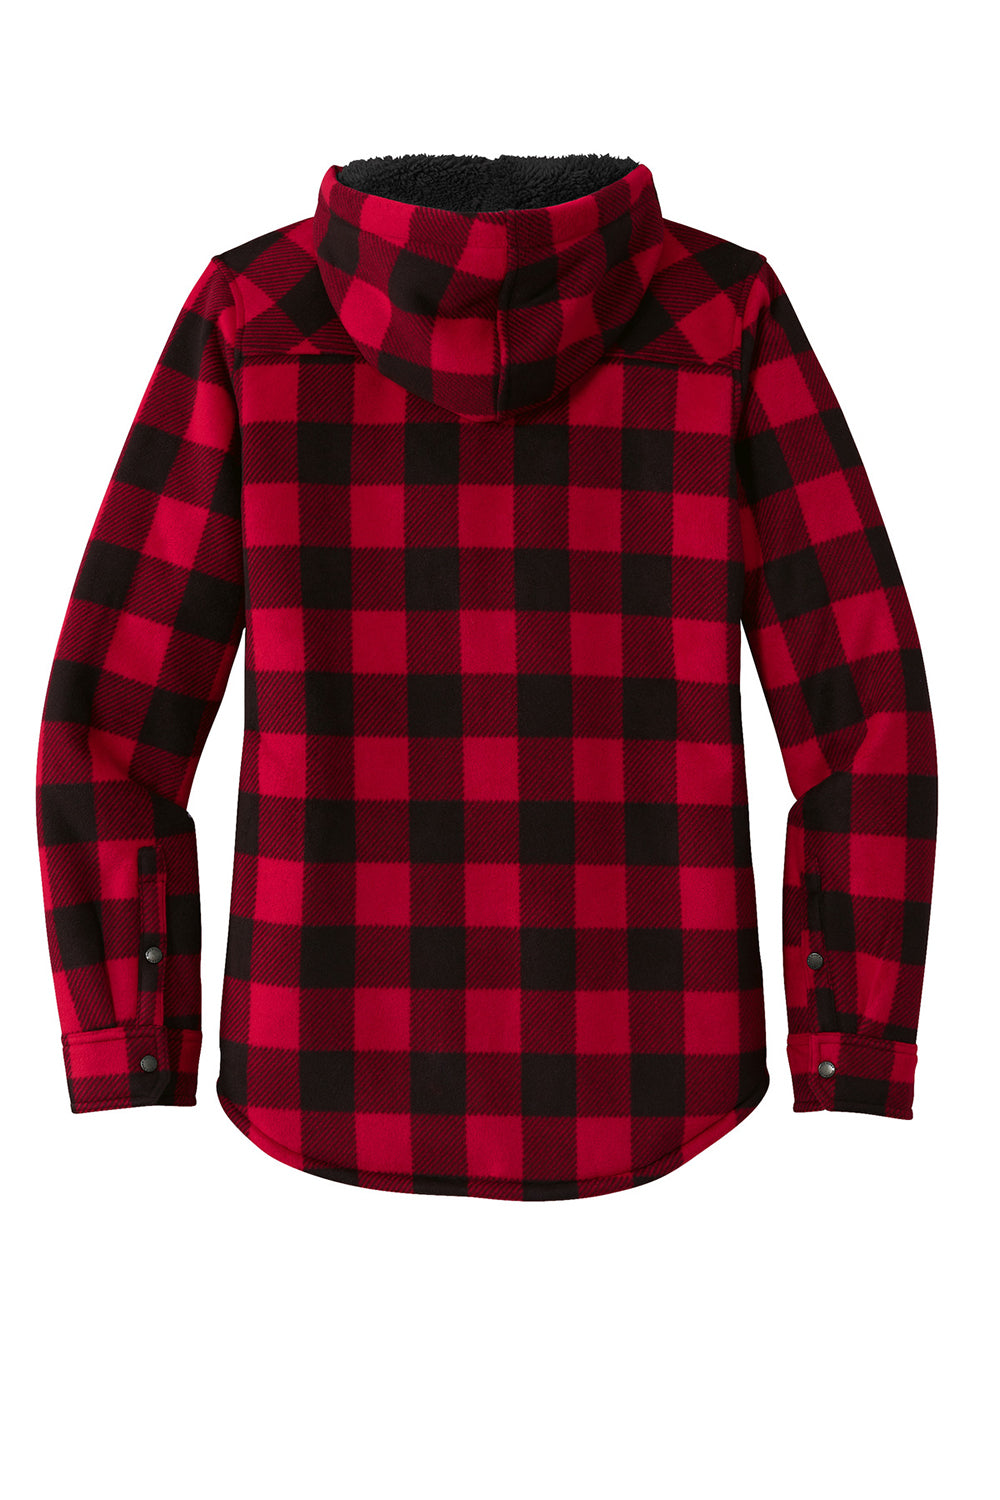 Eddie Bauer EB229 Womens Woodland Snap Front Shirt Jacket w/ Double Pockets Radish Red/Black Flat Back